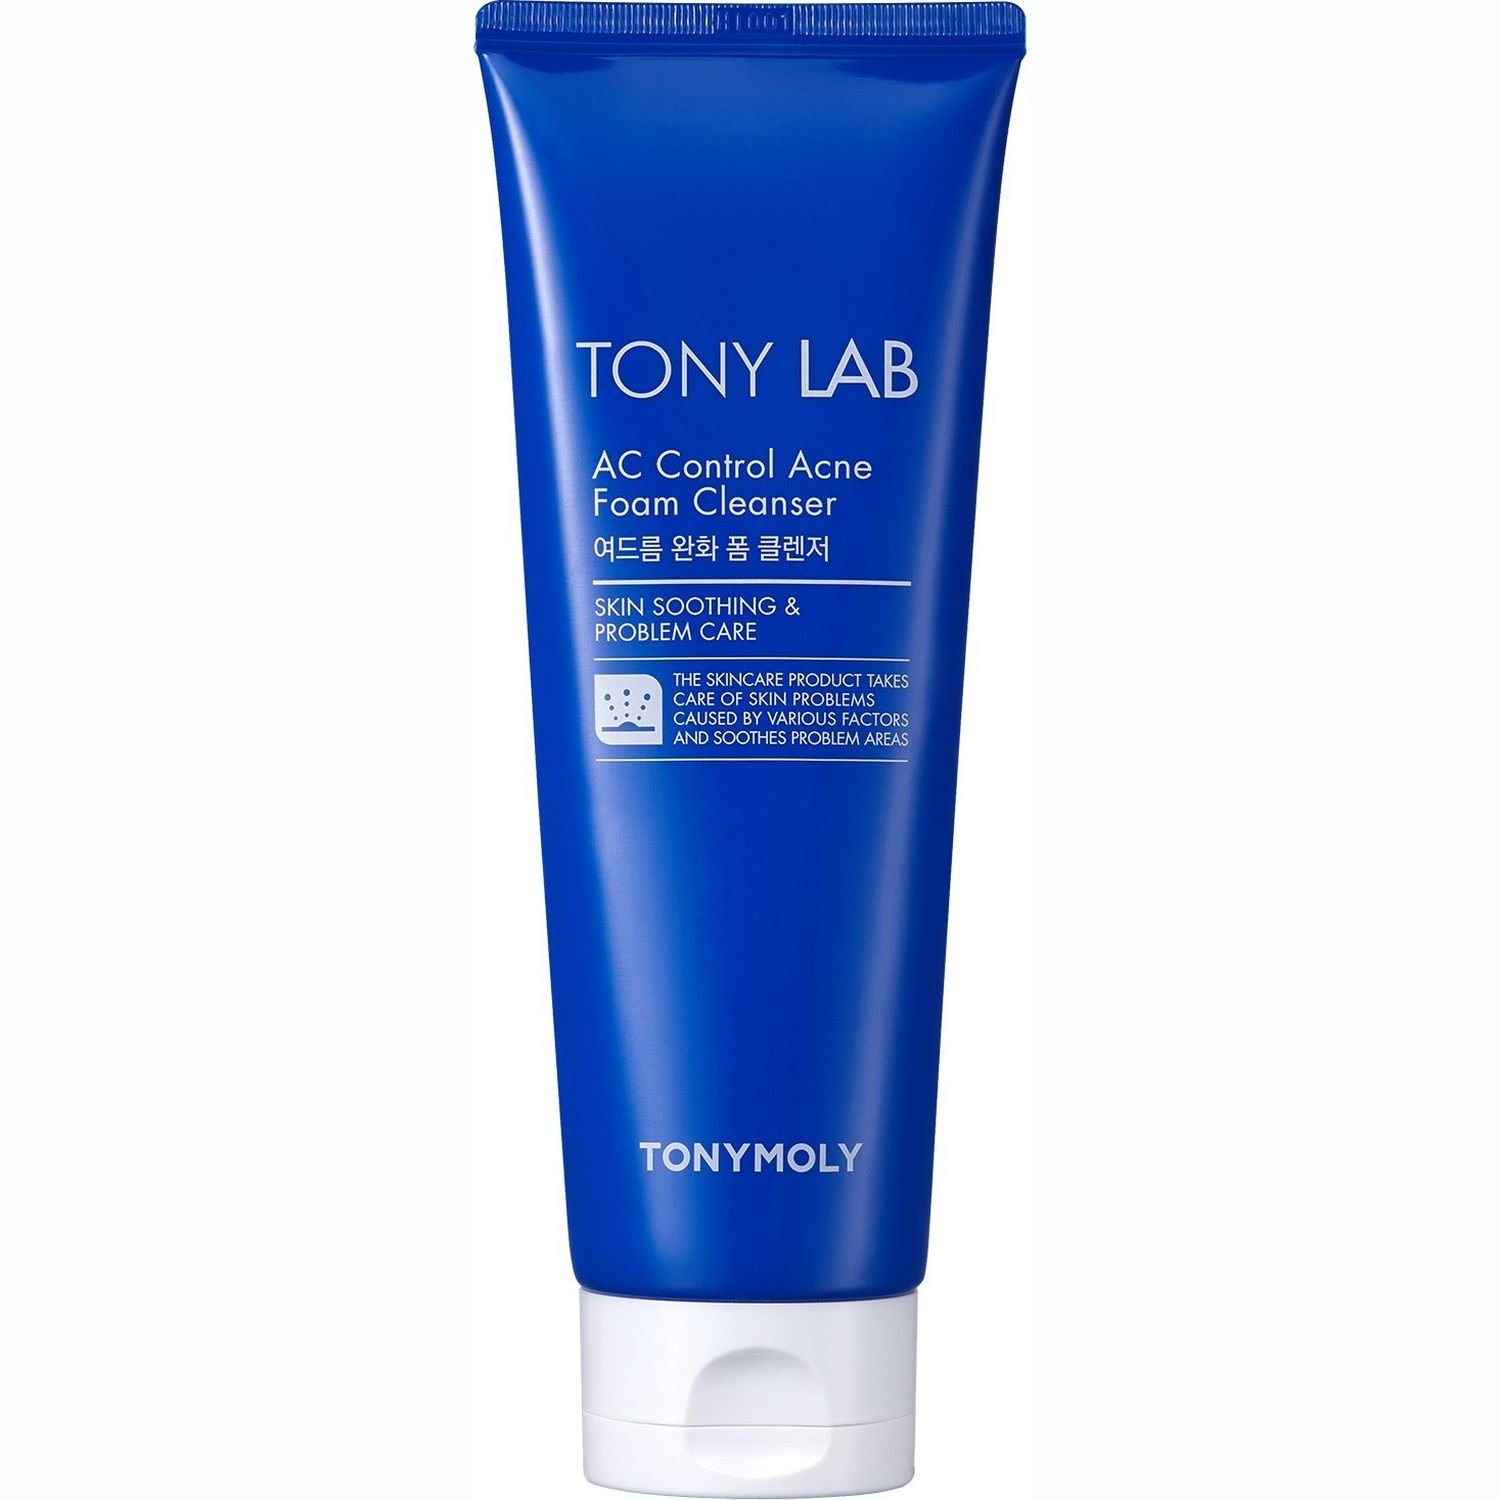 Пенка для умывания Tony Moly Tony Lab AС Control Acne Foam, 150 мл - фото 1